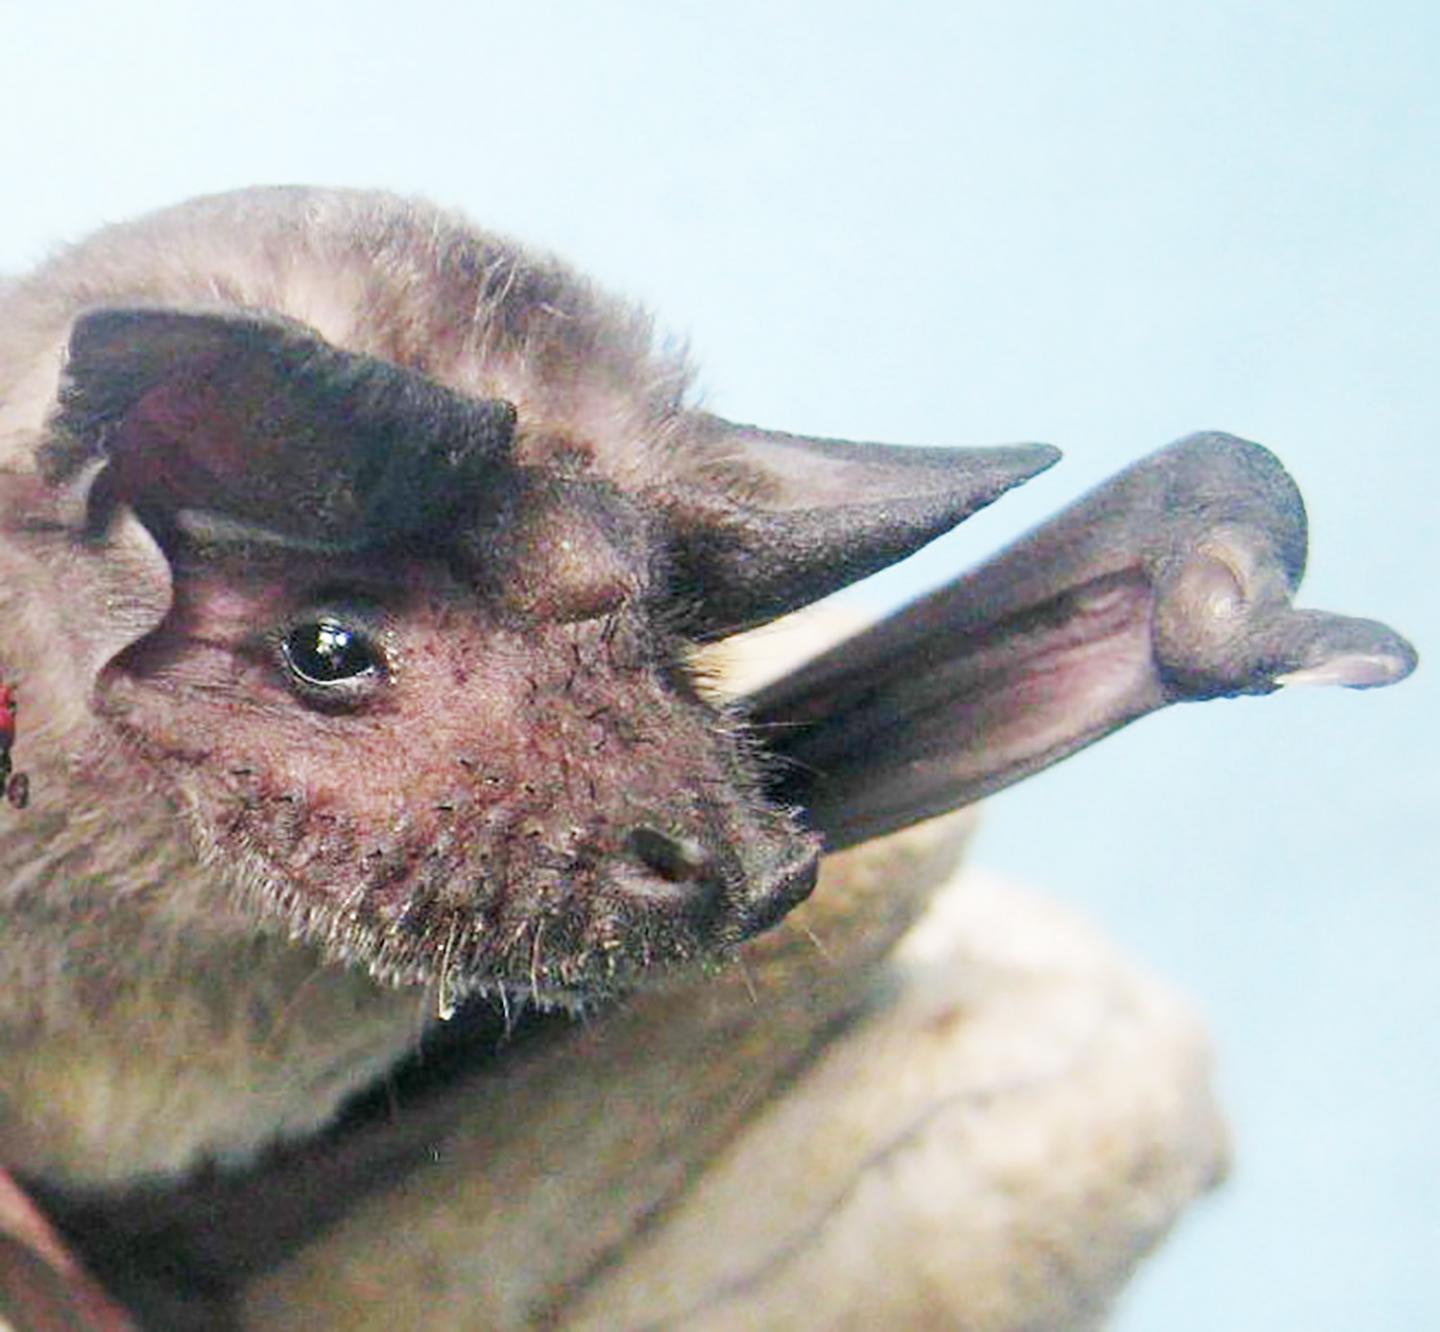 New <em>Bombali ebolavirus</em> Found in Kenyan Bat